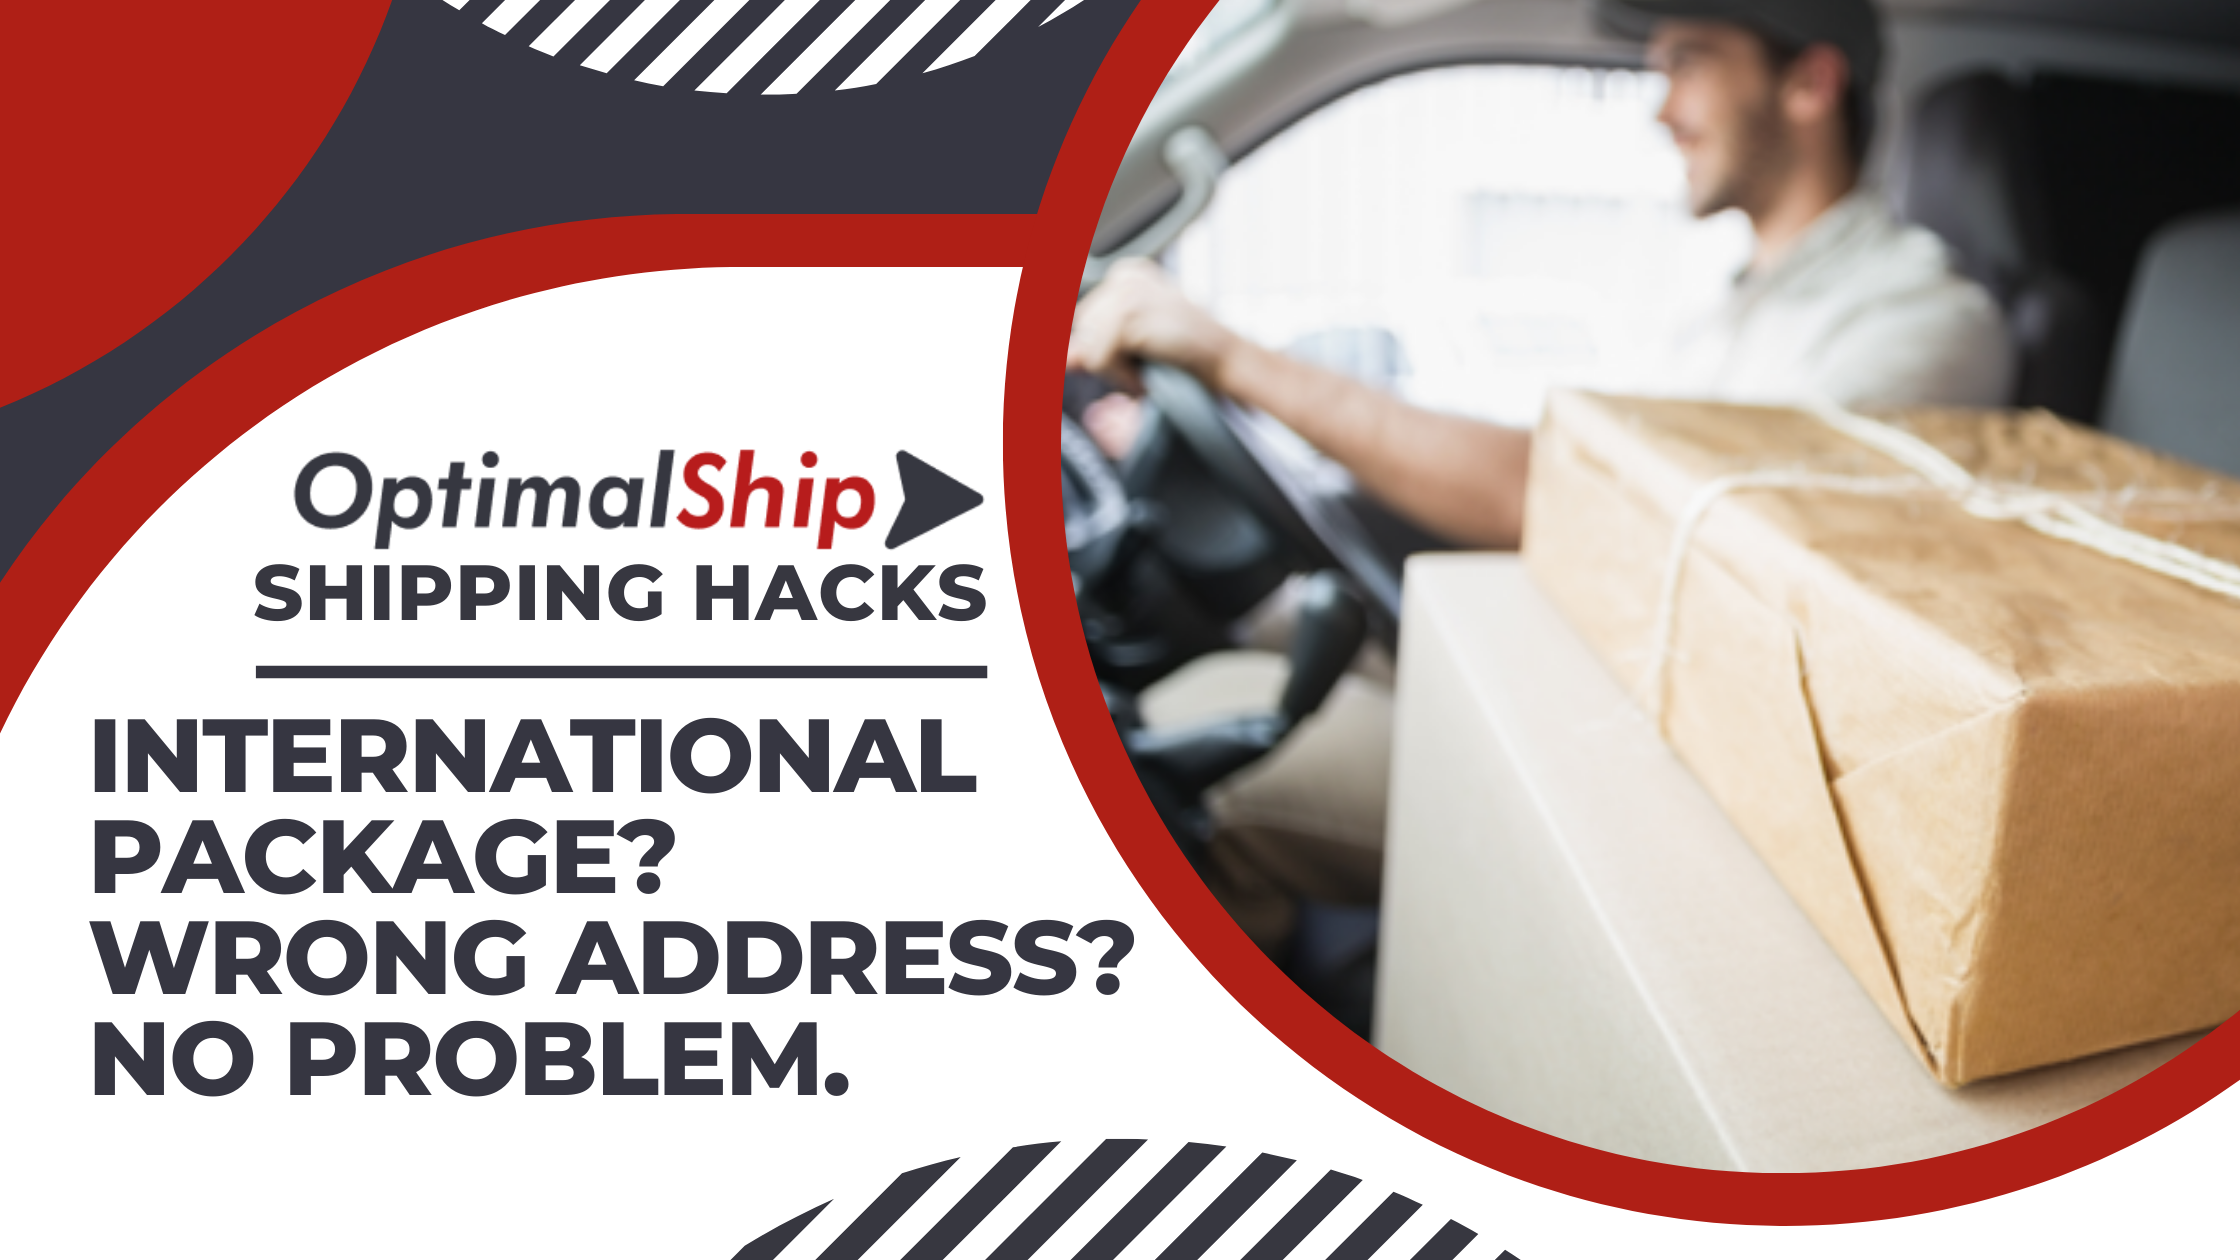 4 Steps to Change an Incorrect Shipment Address